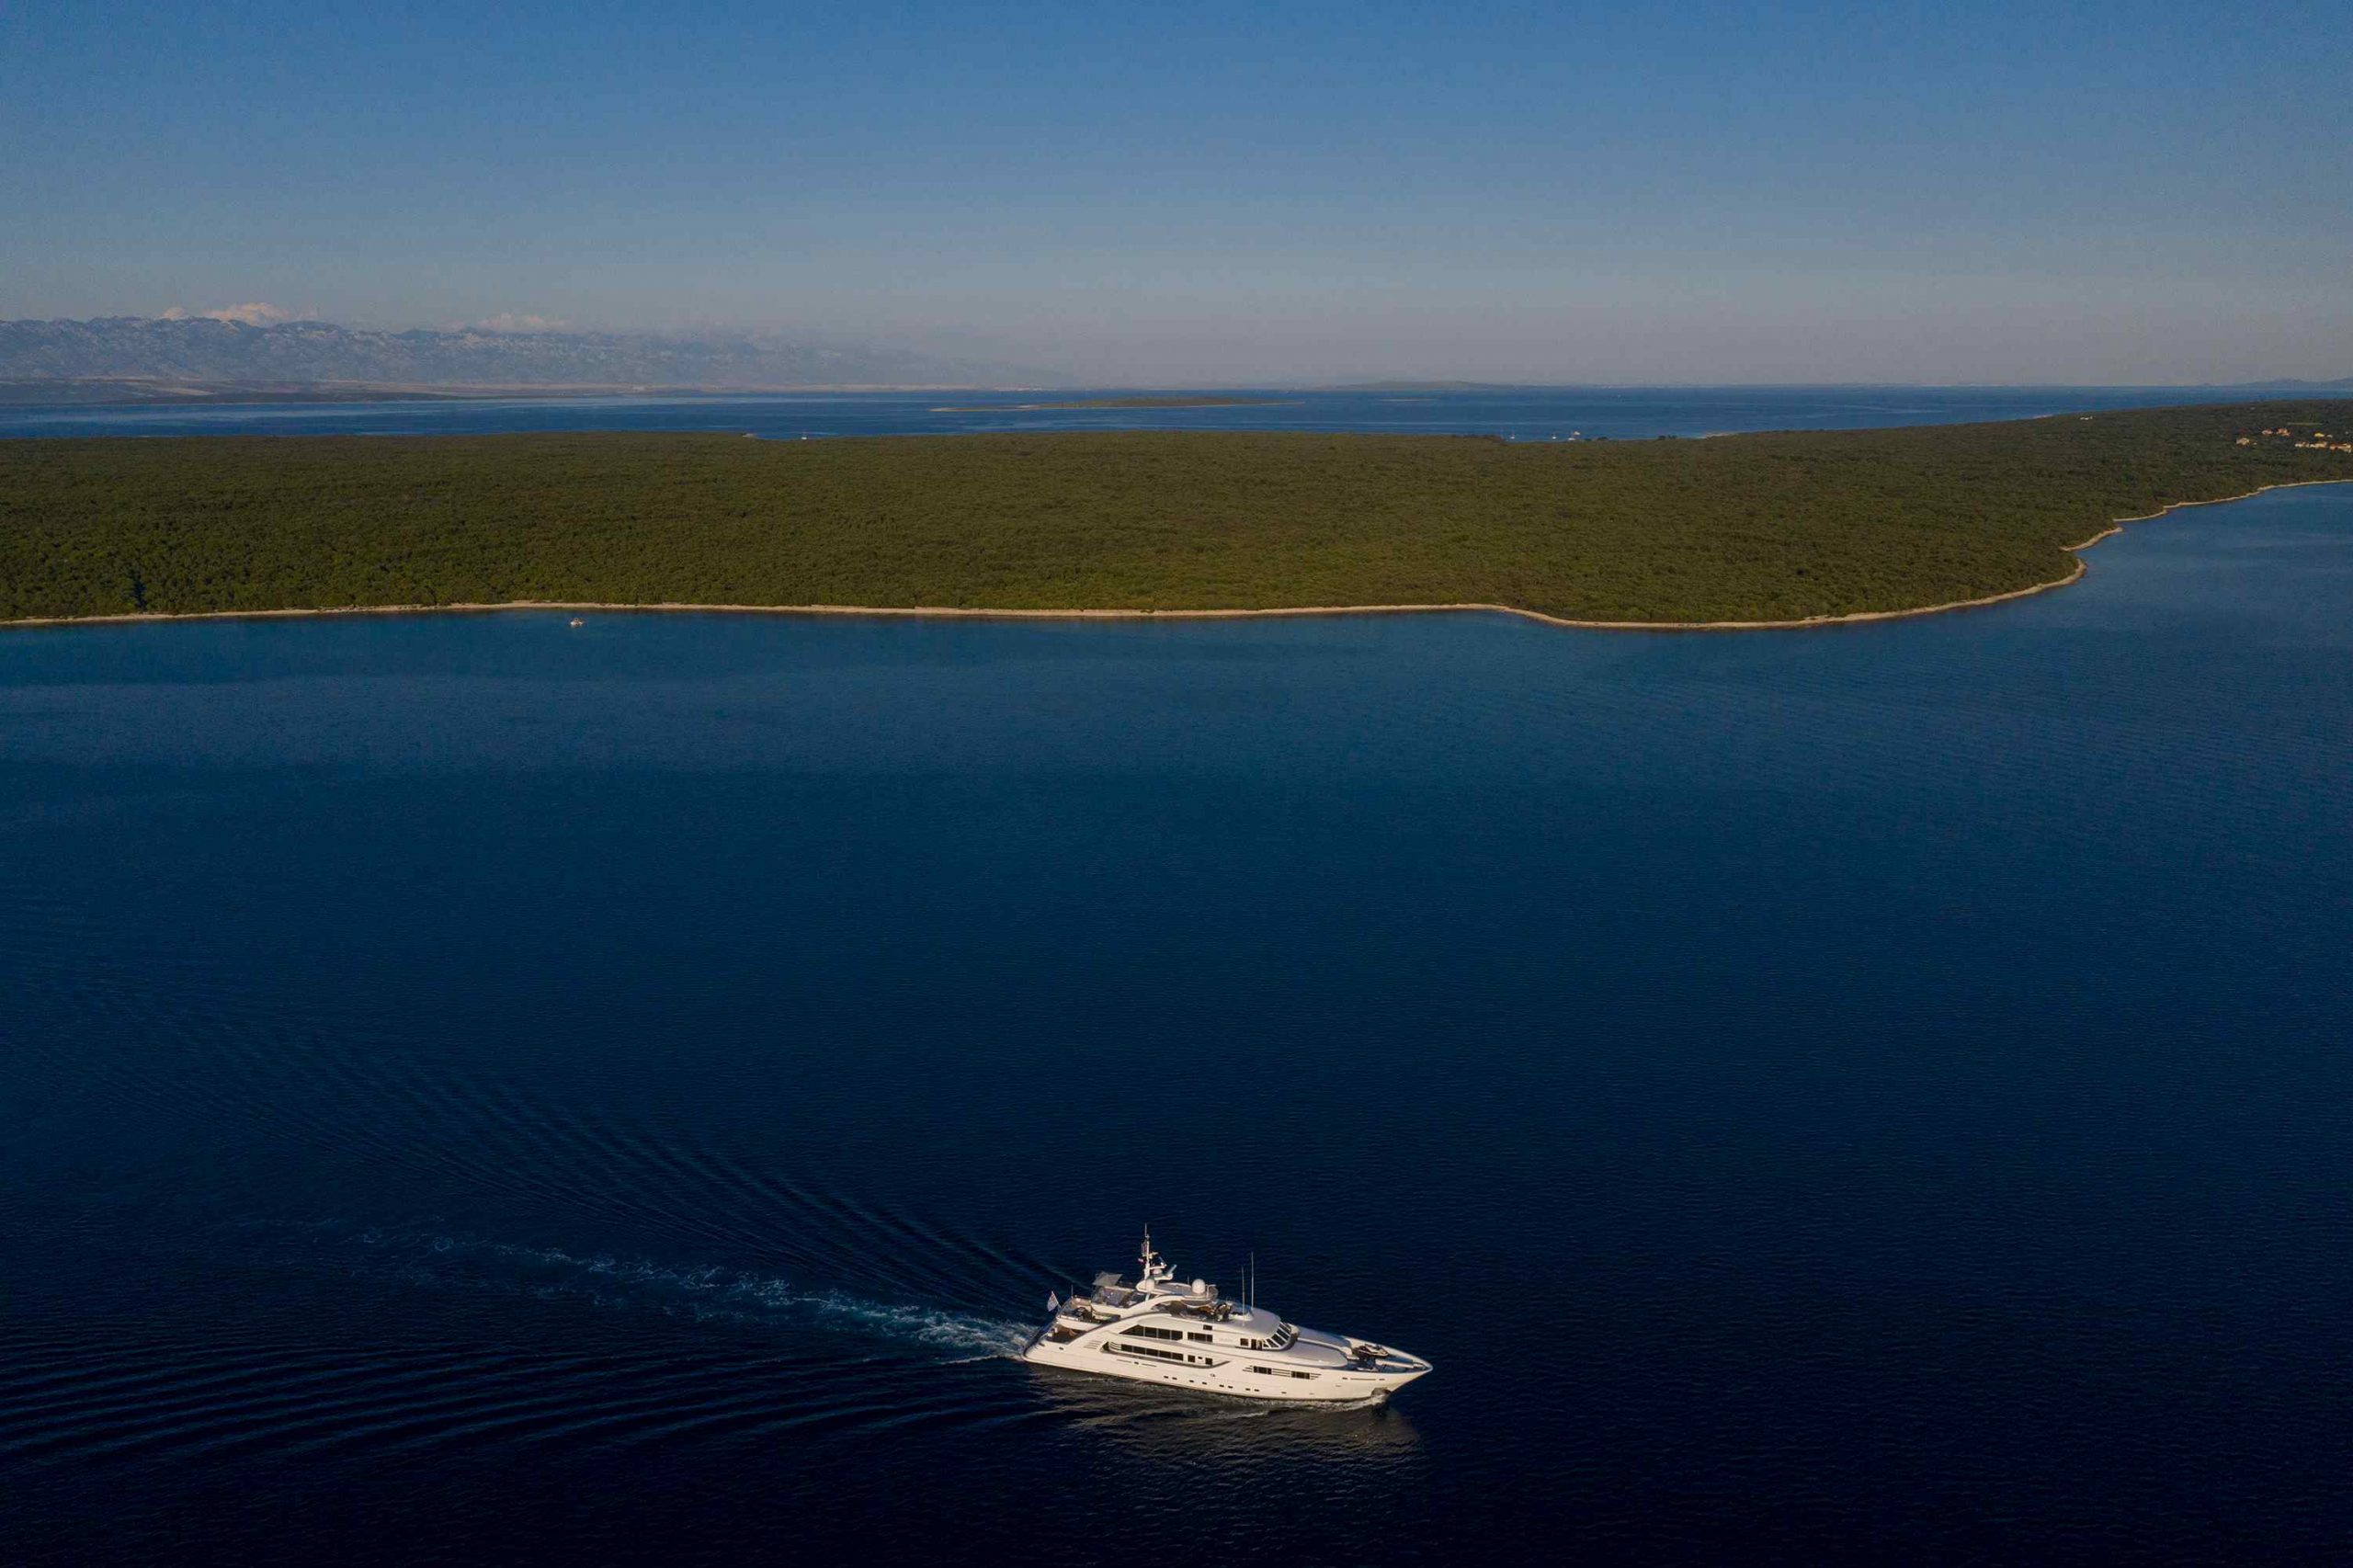 Alalya Yacht Charter cruising in Croatia aerial view, ISA yachts